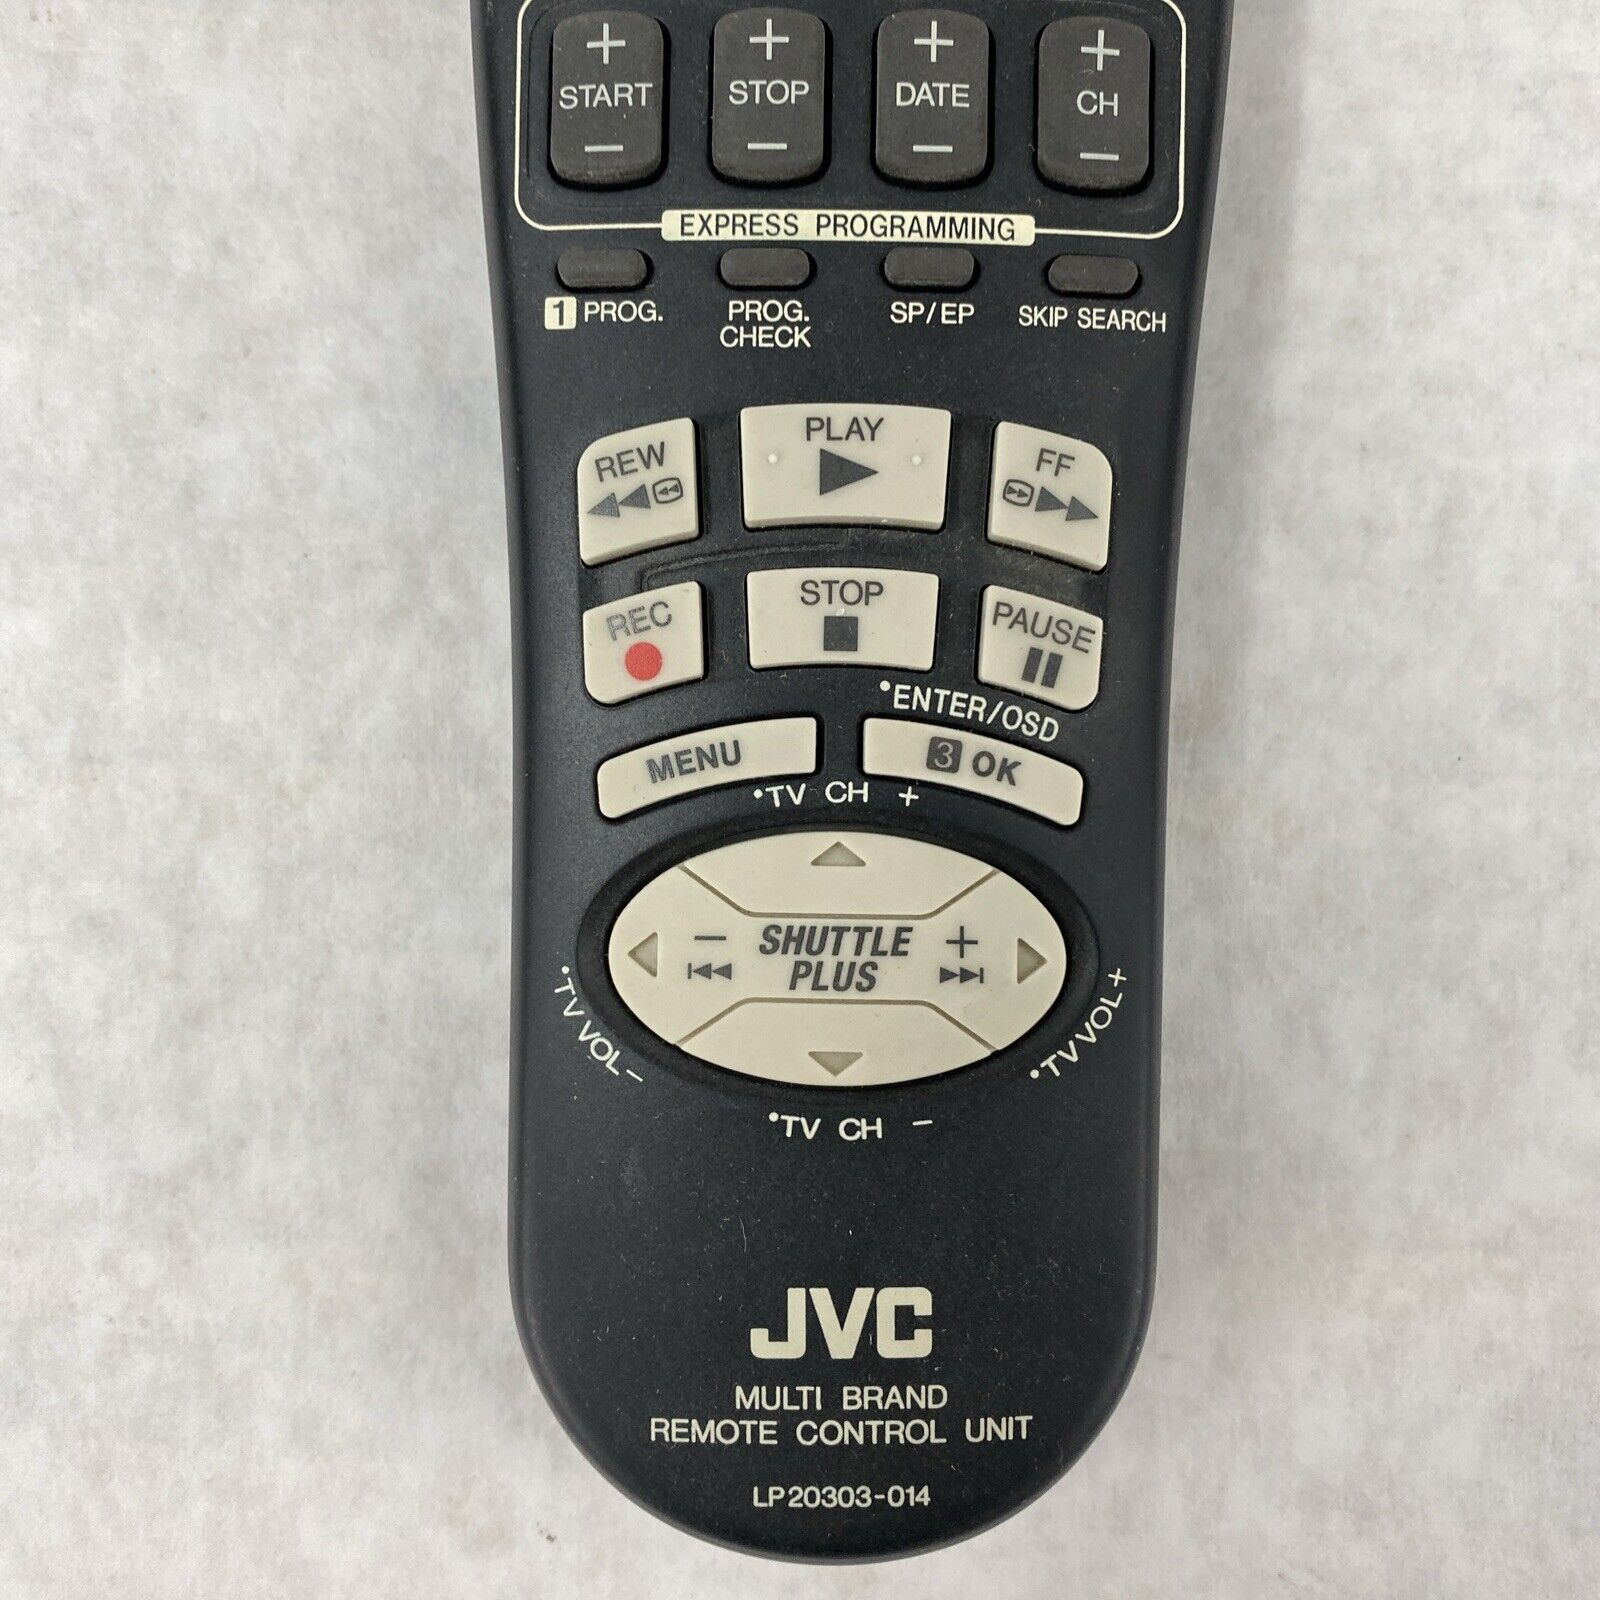 JVC LP20303-014 Multi Brand TV Television Remote Control Unit Tested